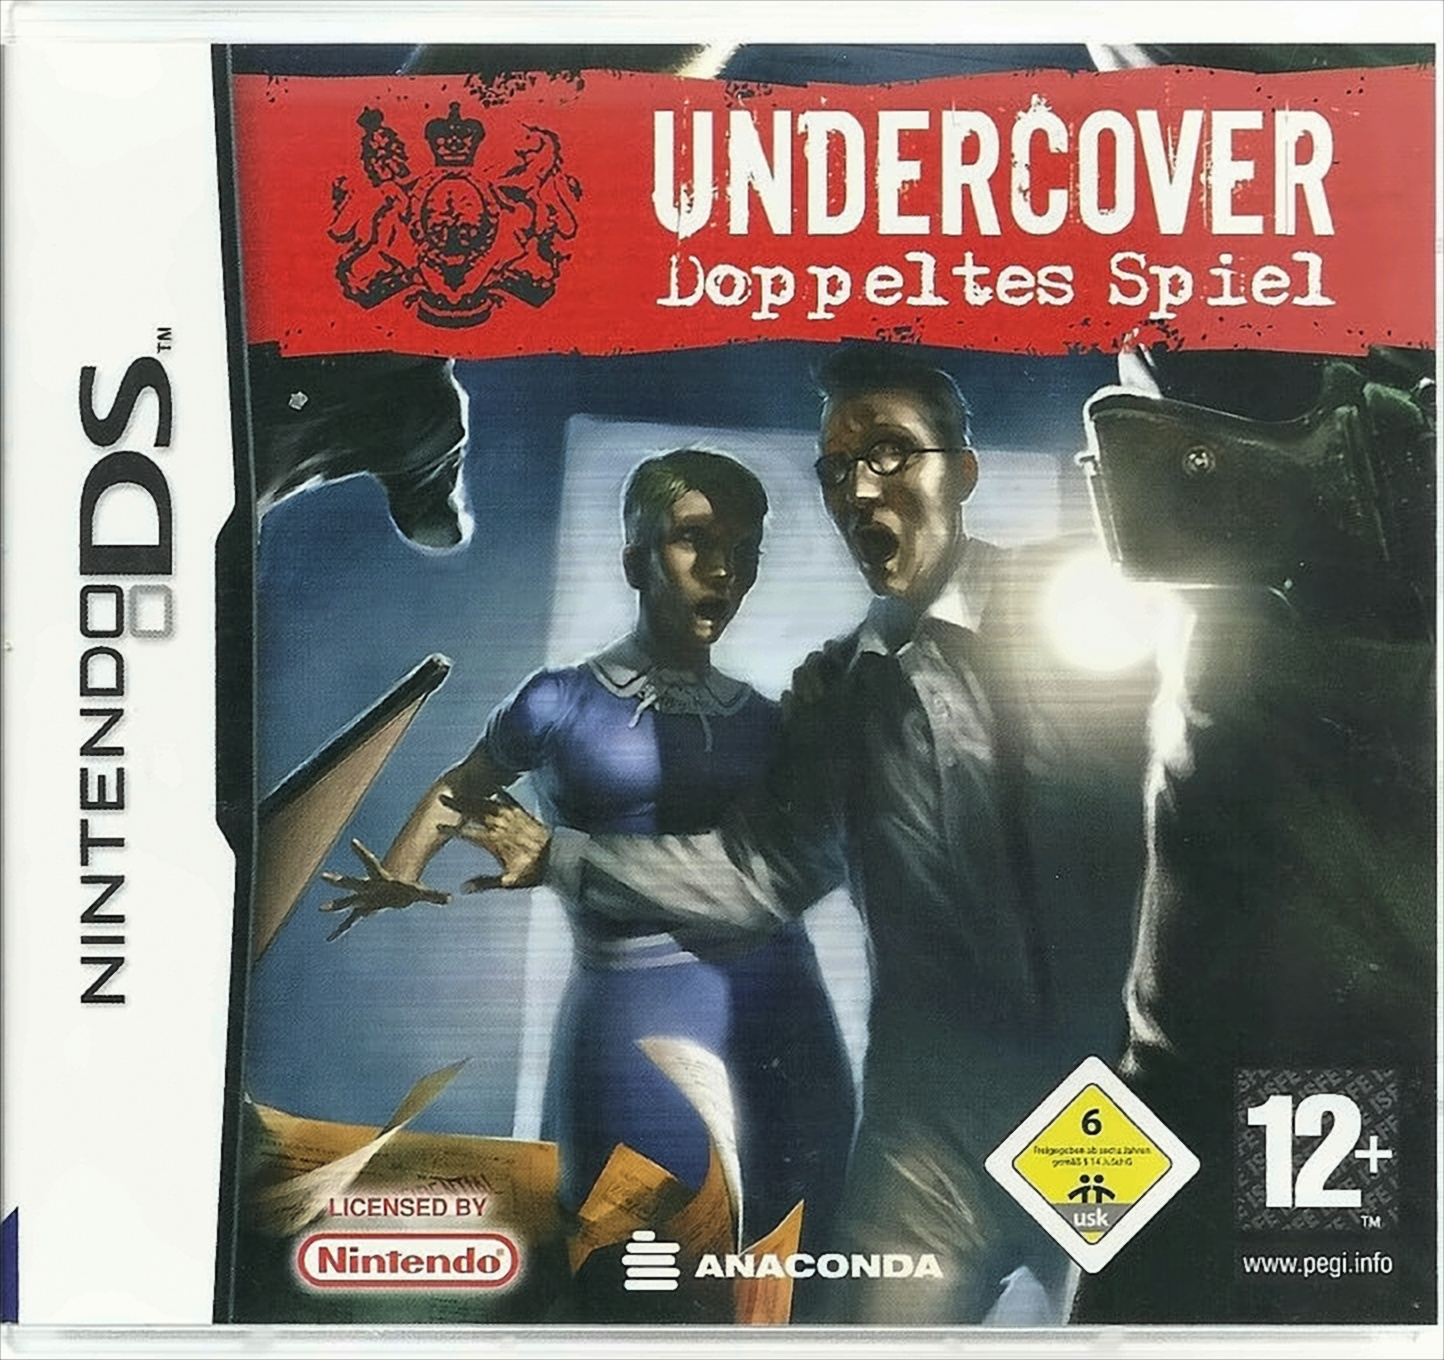 Undercover: Doppeltes Spiel - DS] [Nintendo